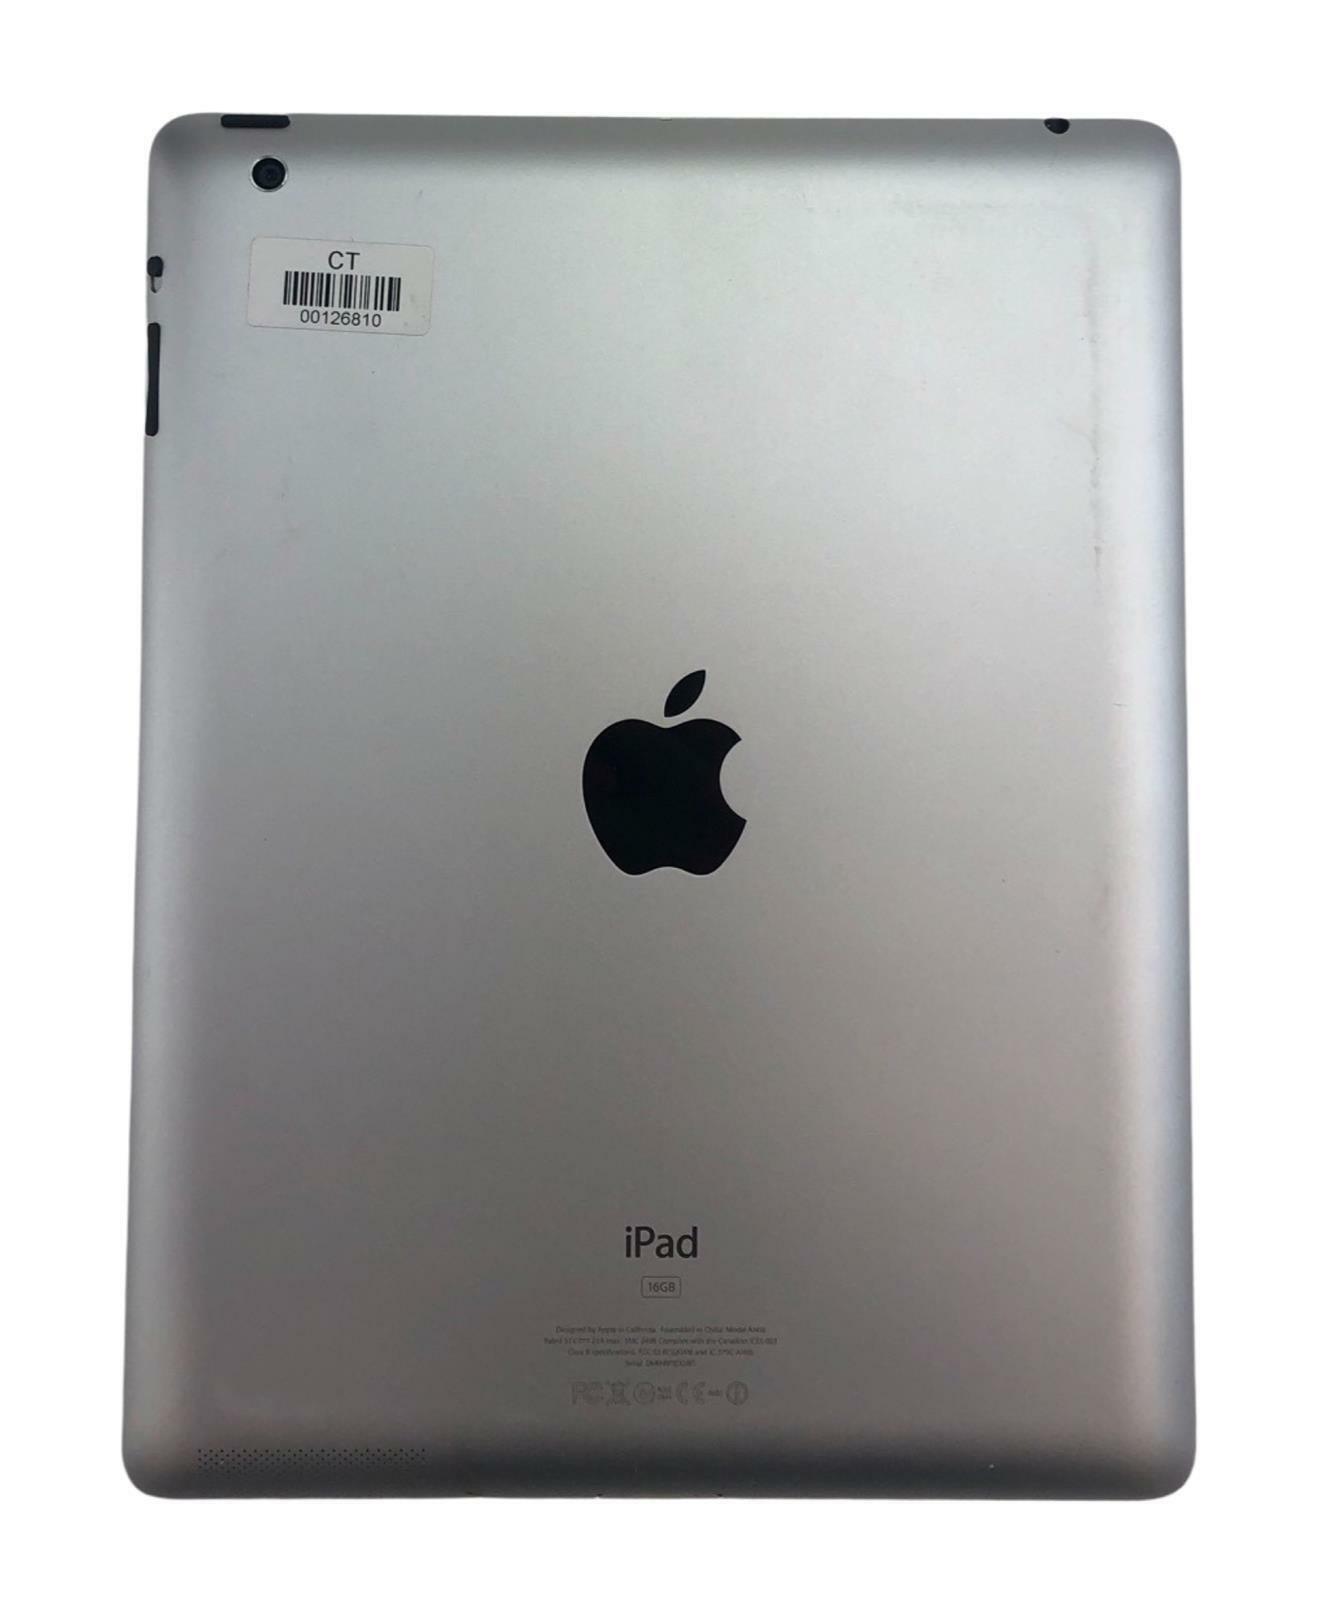 Apple iPad 3rd Generation A1416 2012 9.7" 32GB WiFi Only MD339LL/A - Black